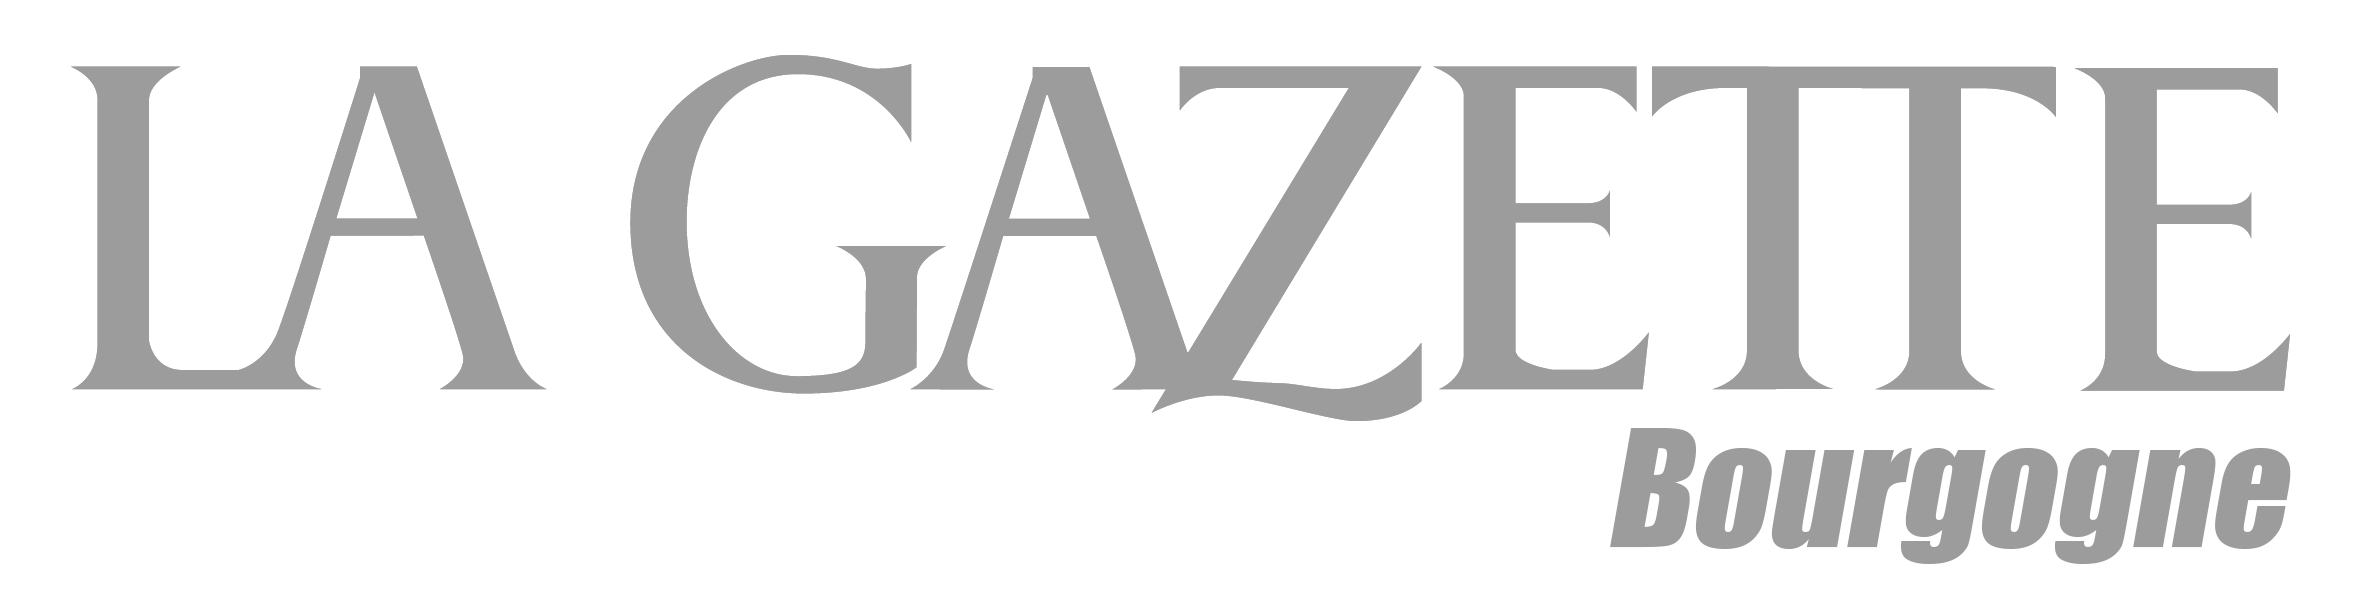 La Gazette Bourgogne